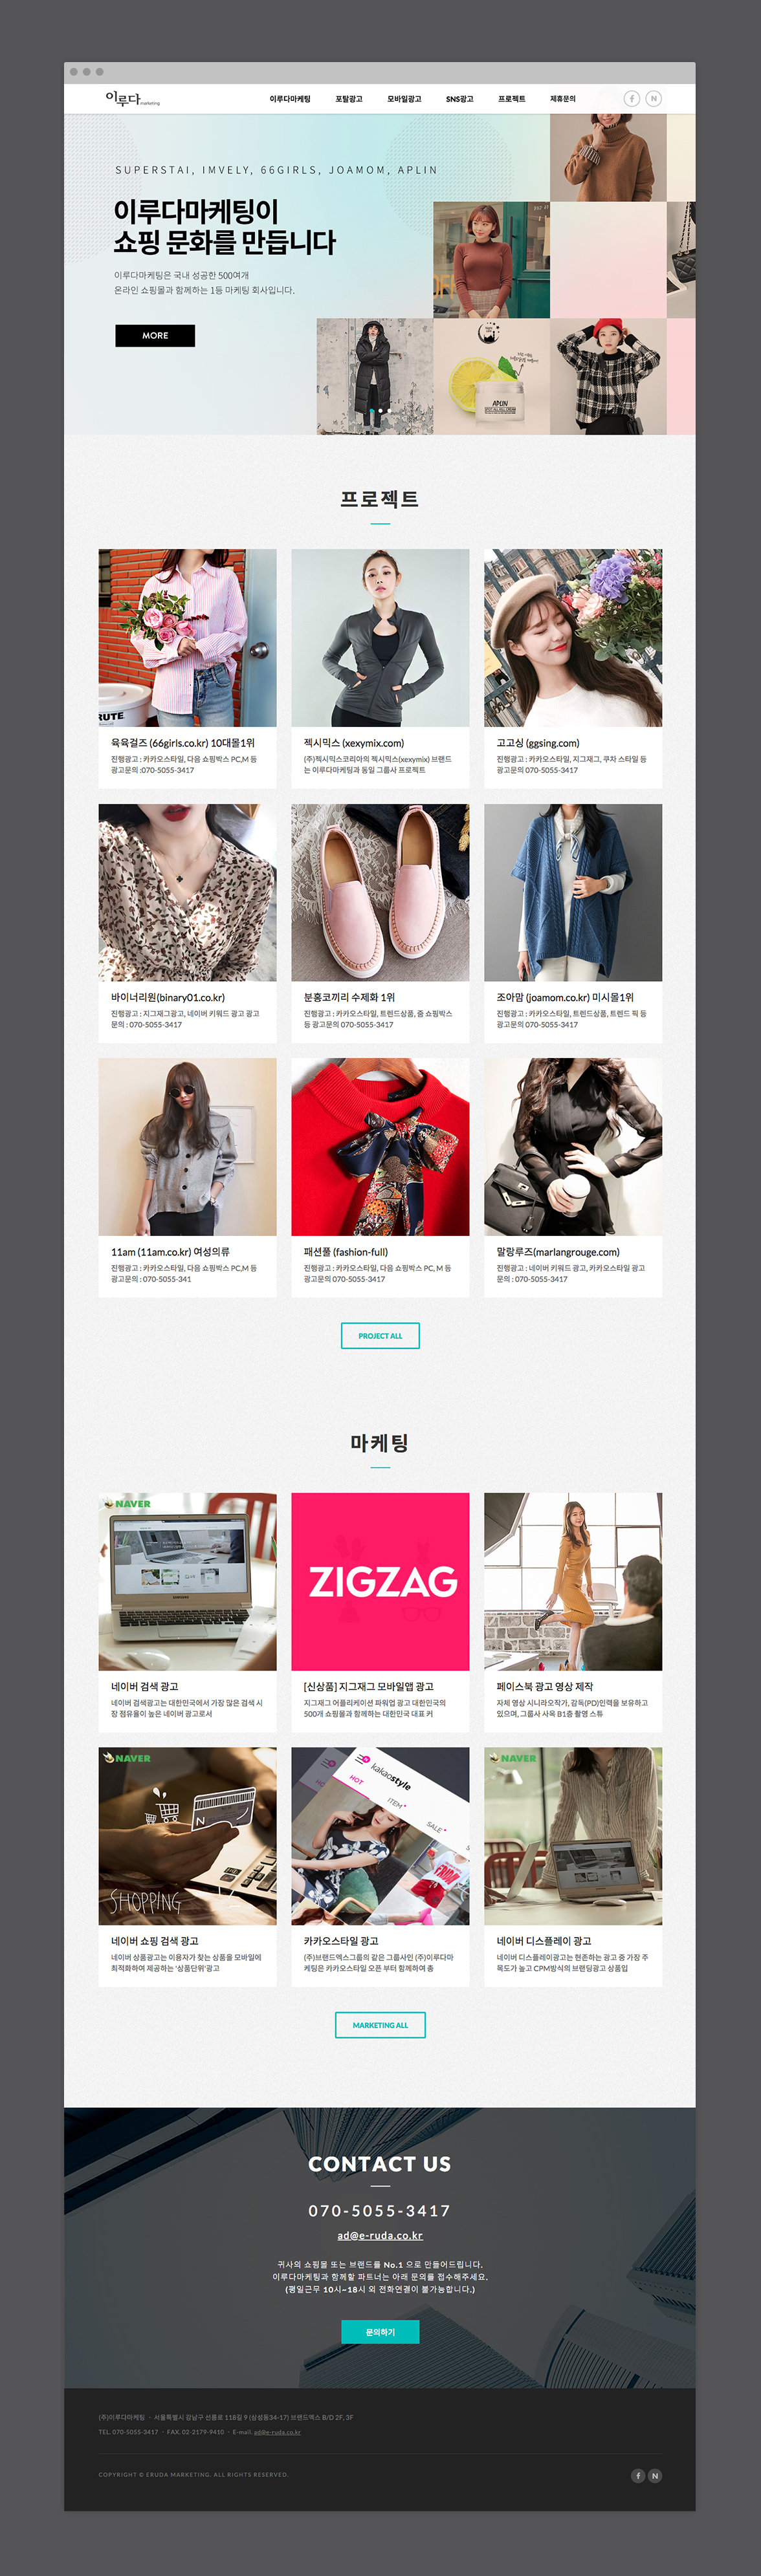 ERUDA MARKETING Homepage Web Design | Sugar Design